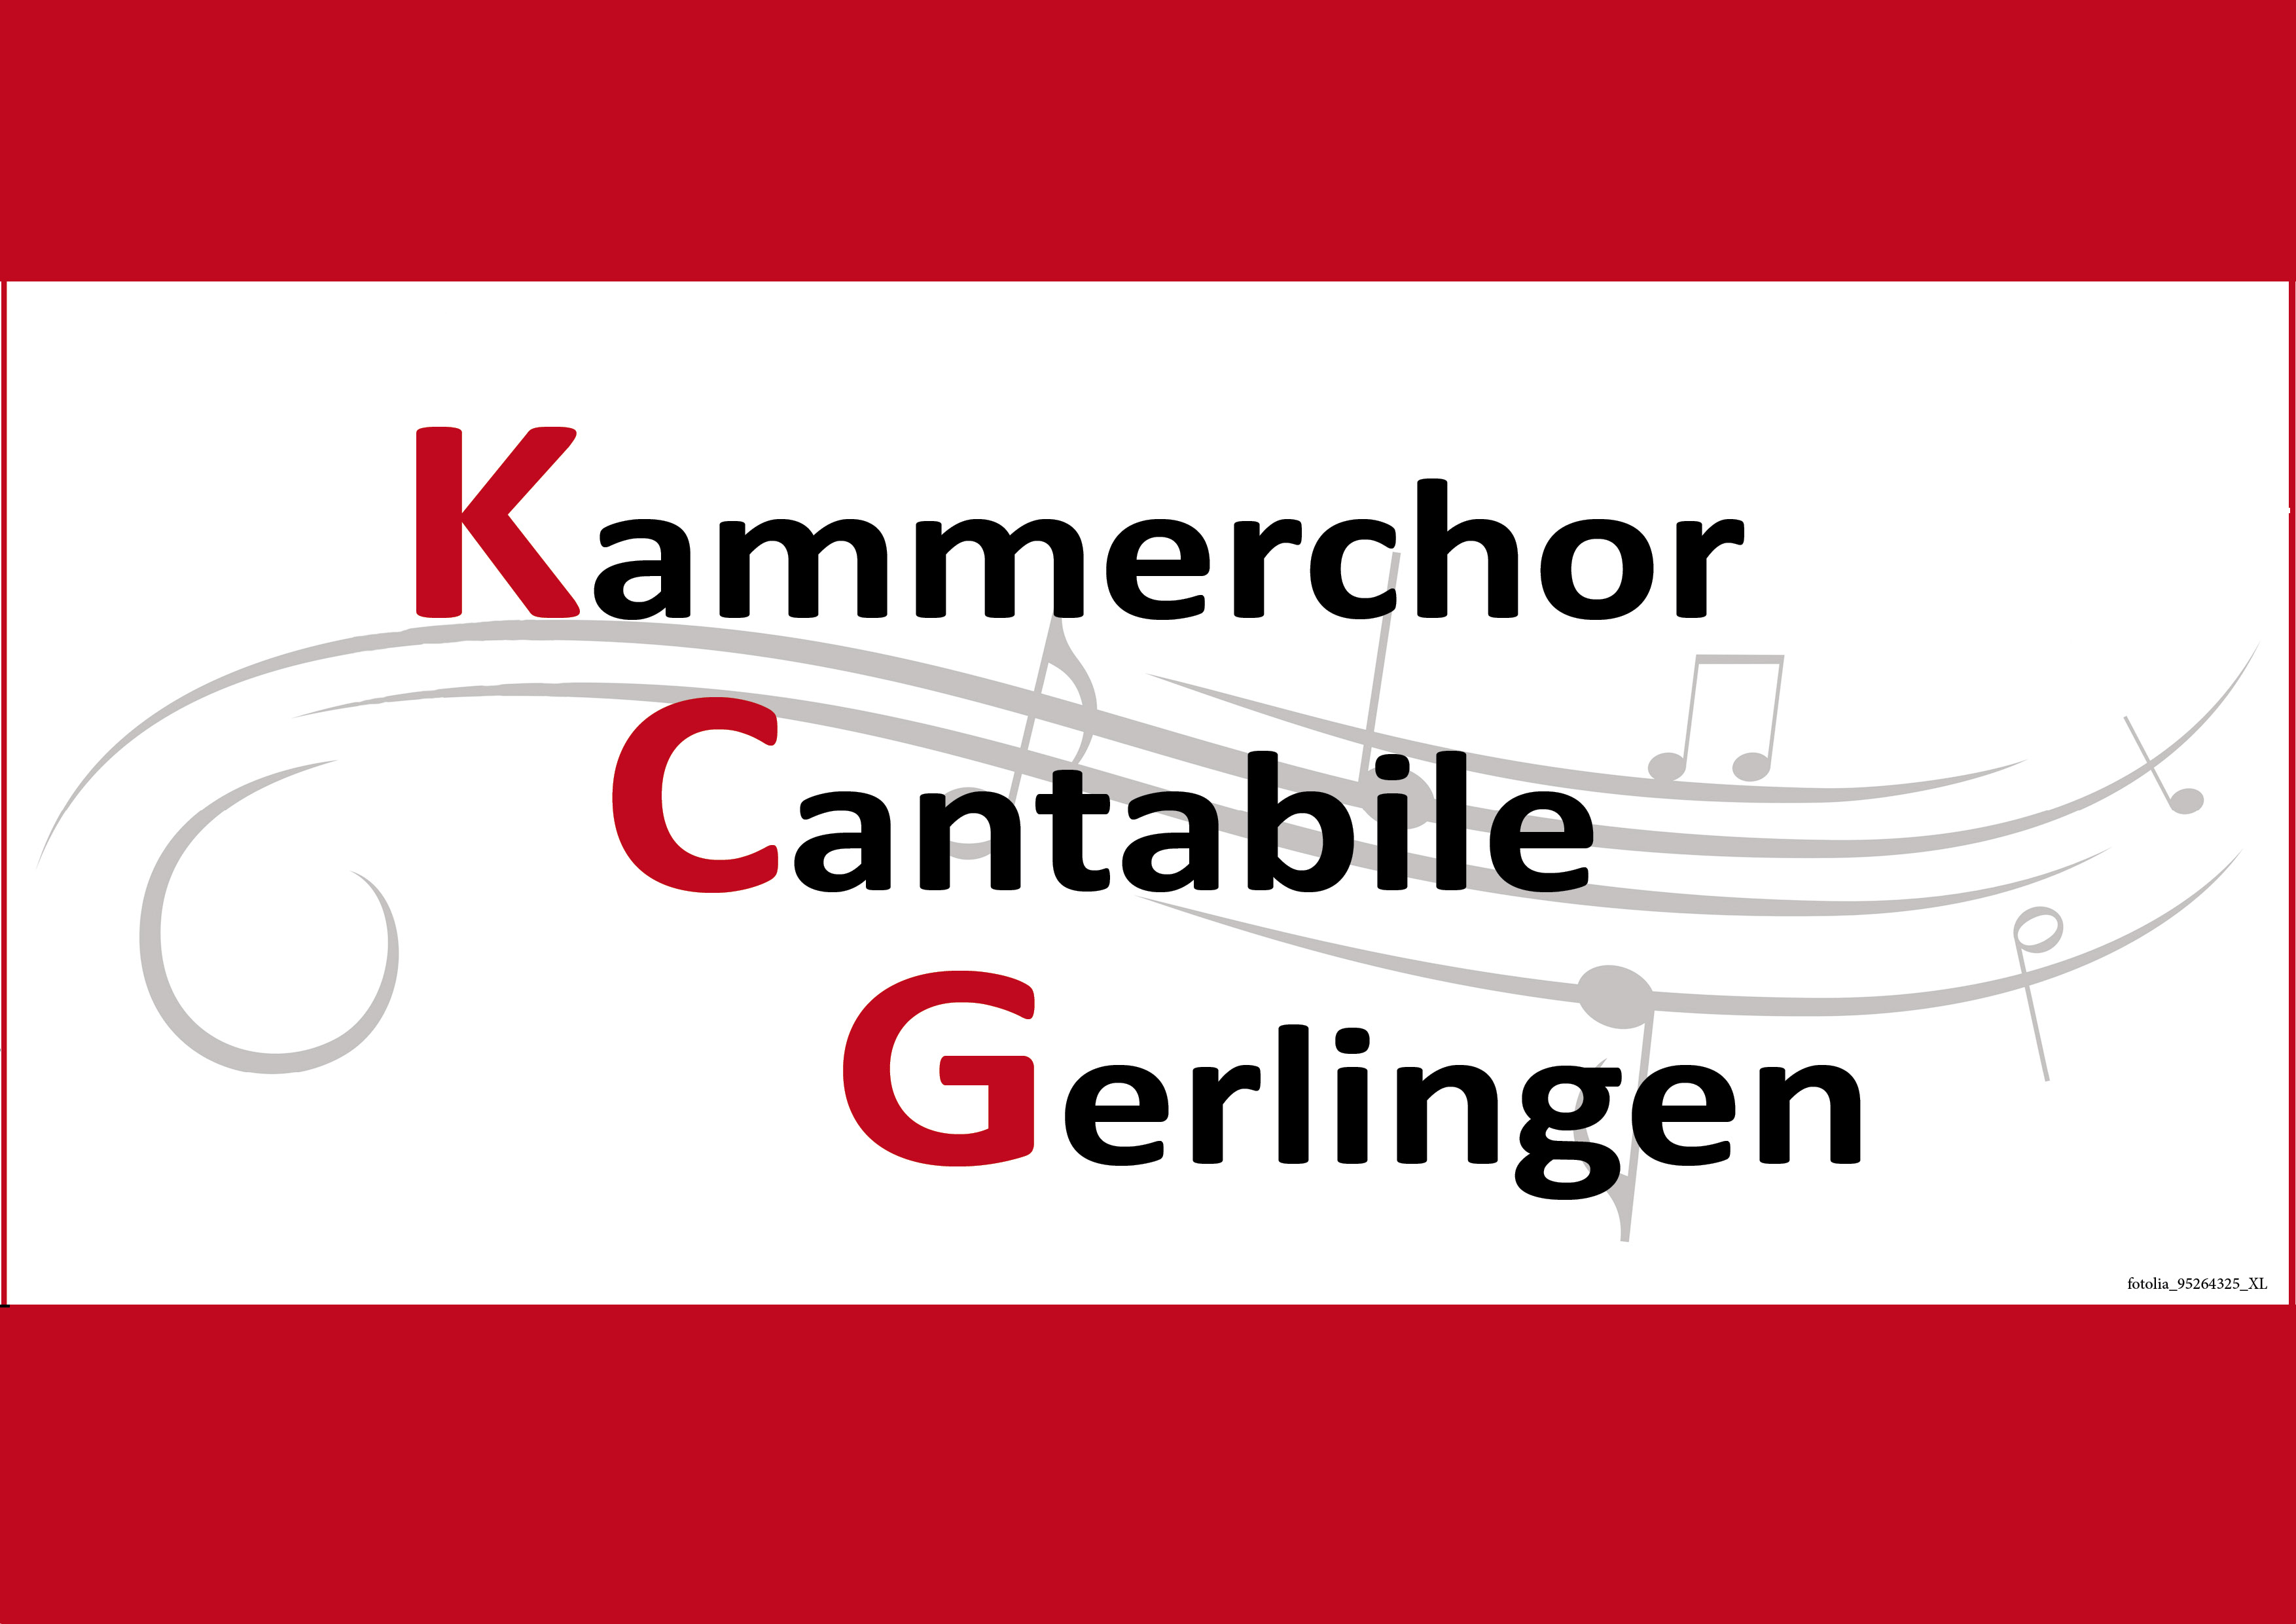 Kammerchor Cantabile Gerlingen